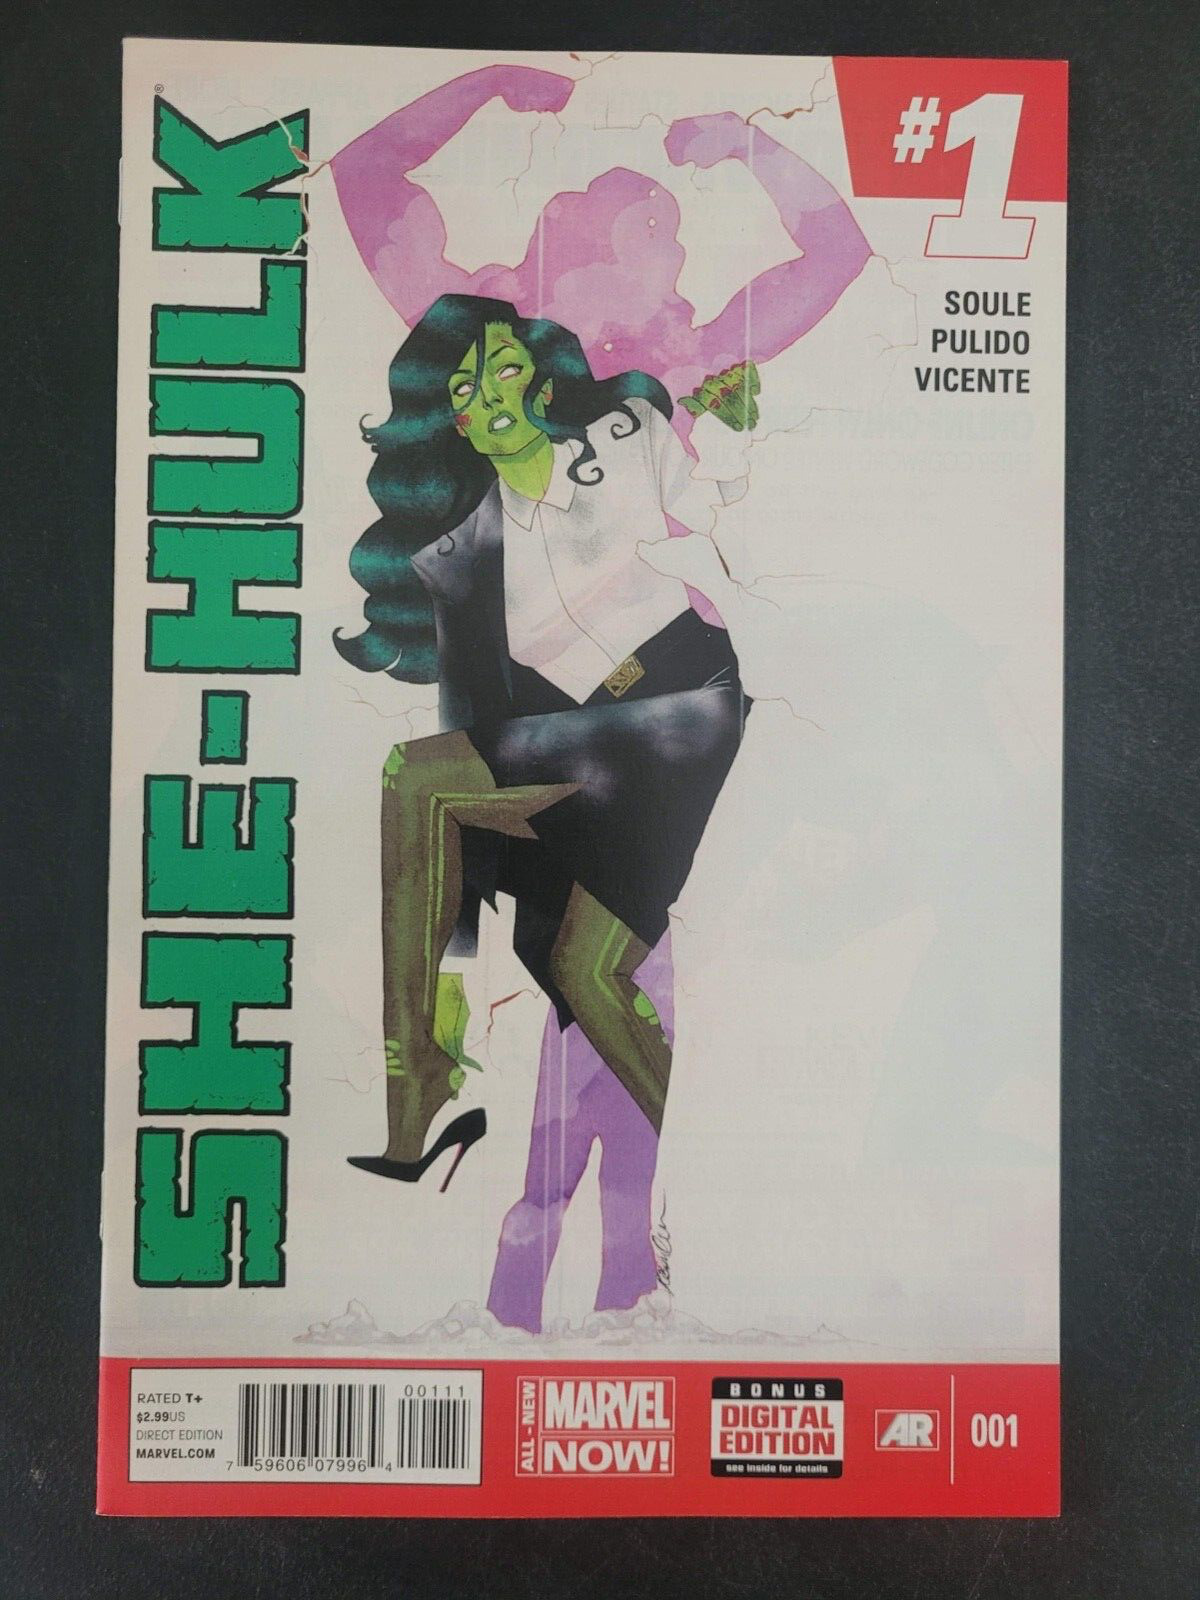 SHE-HULK #1 (2014) ALL-NEW MARVEL NOW CHARLES SOULE JAVIER PULIDO